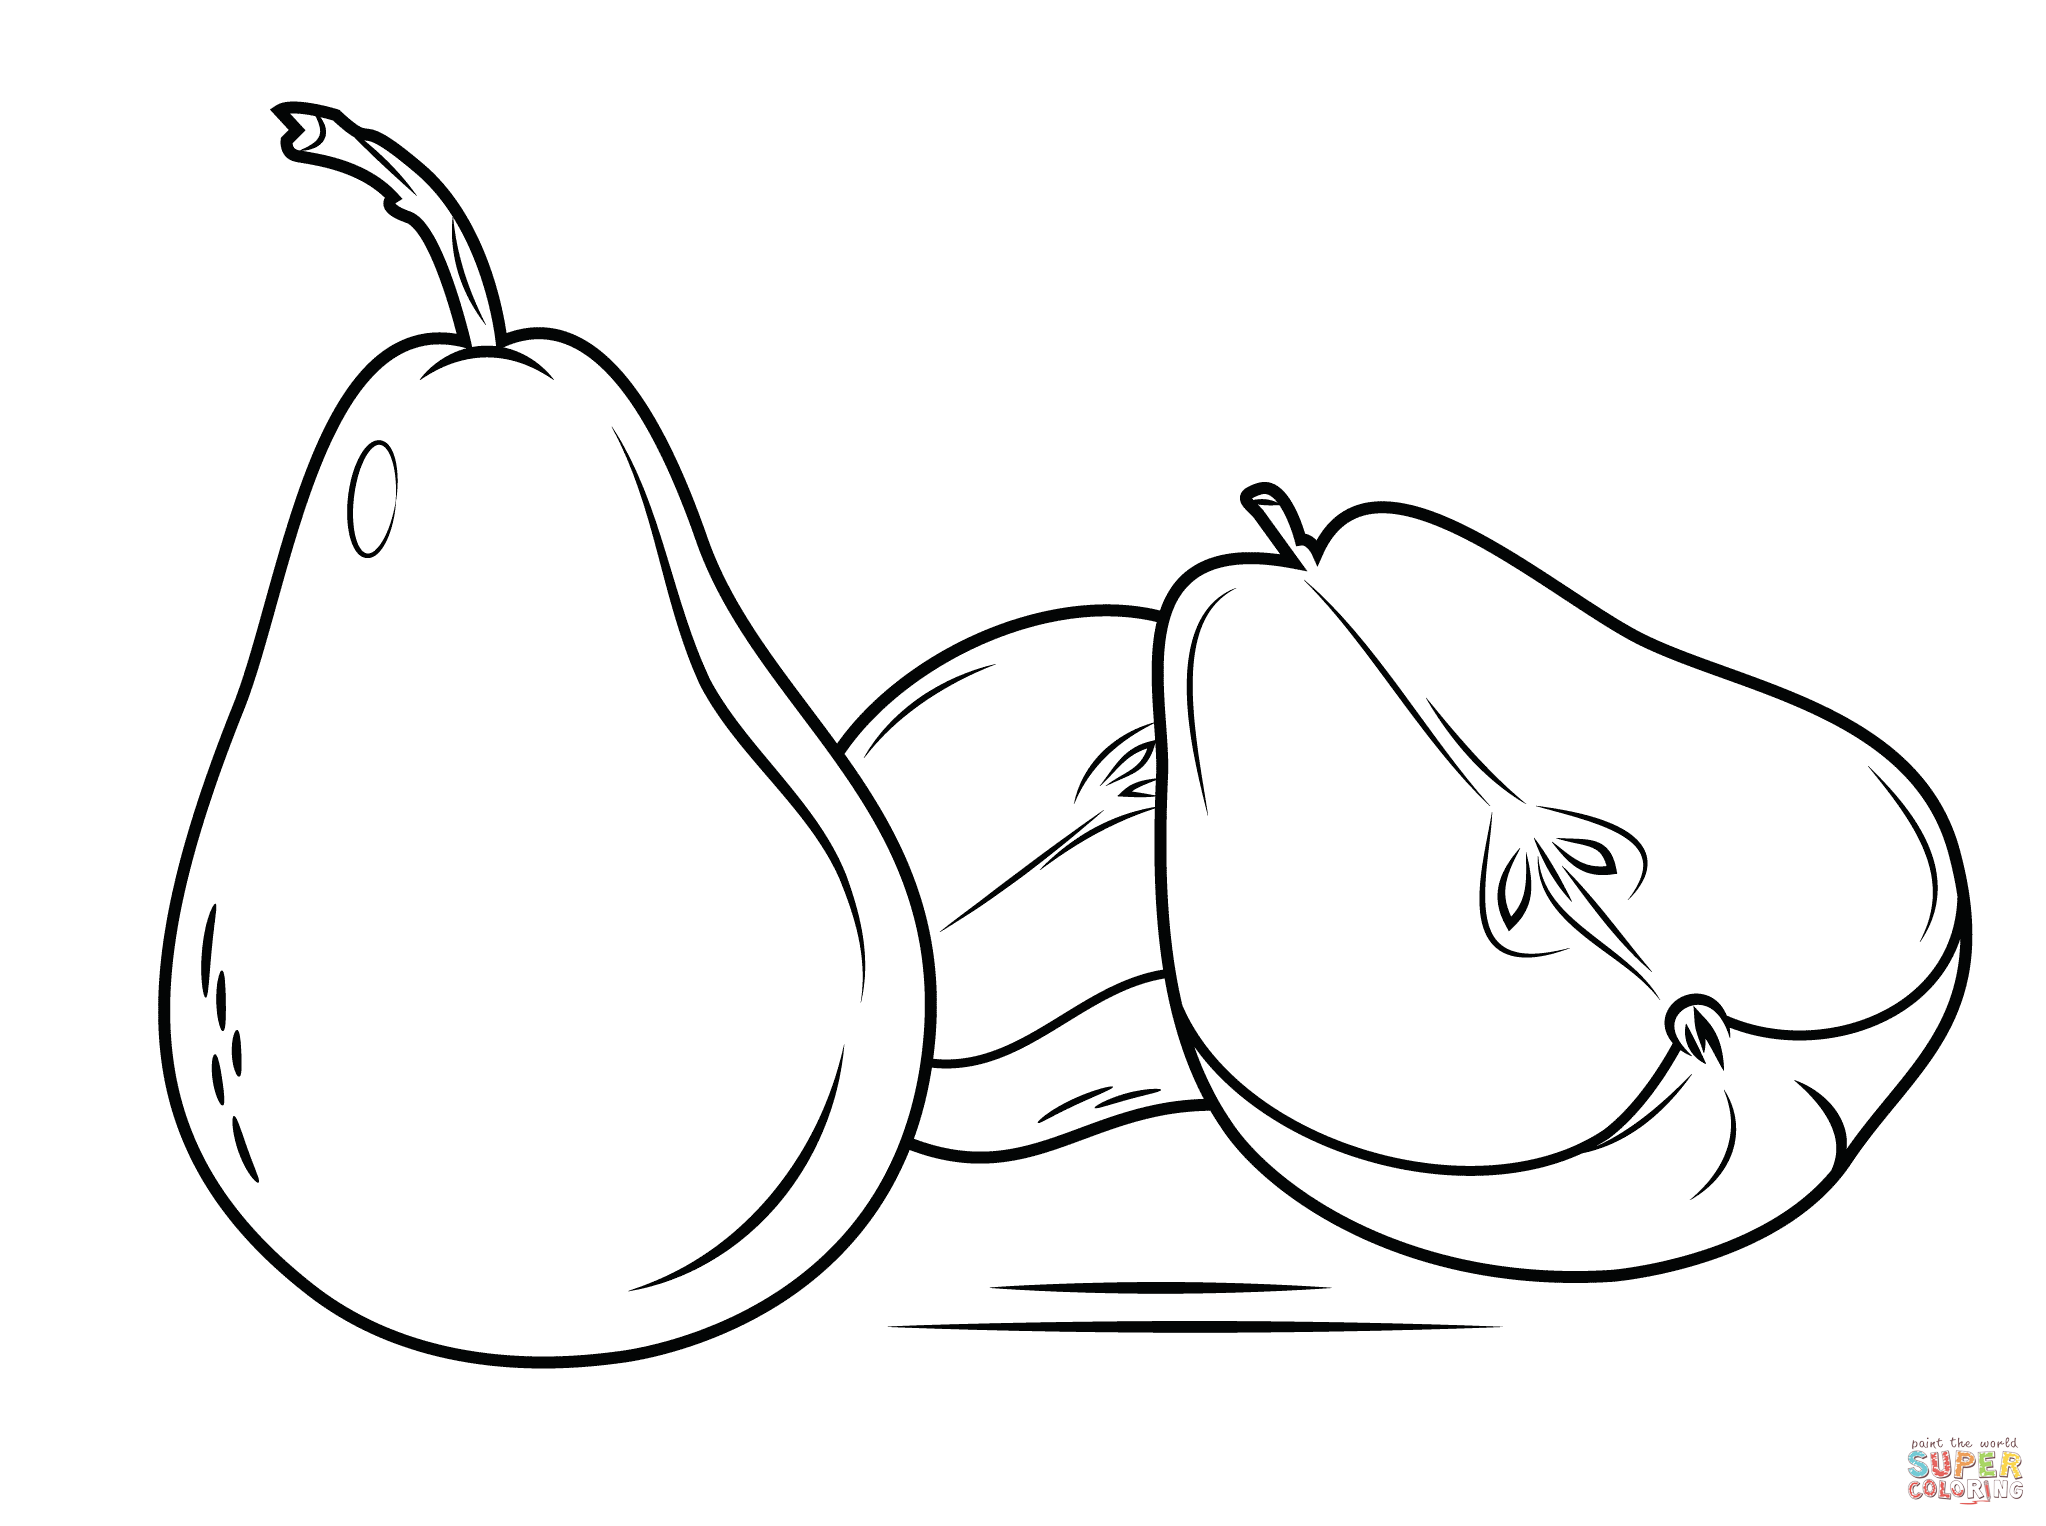 Pear coloring #1, Download drawings